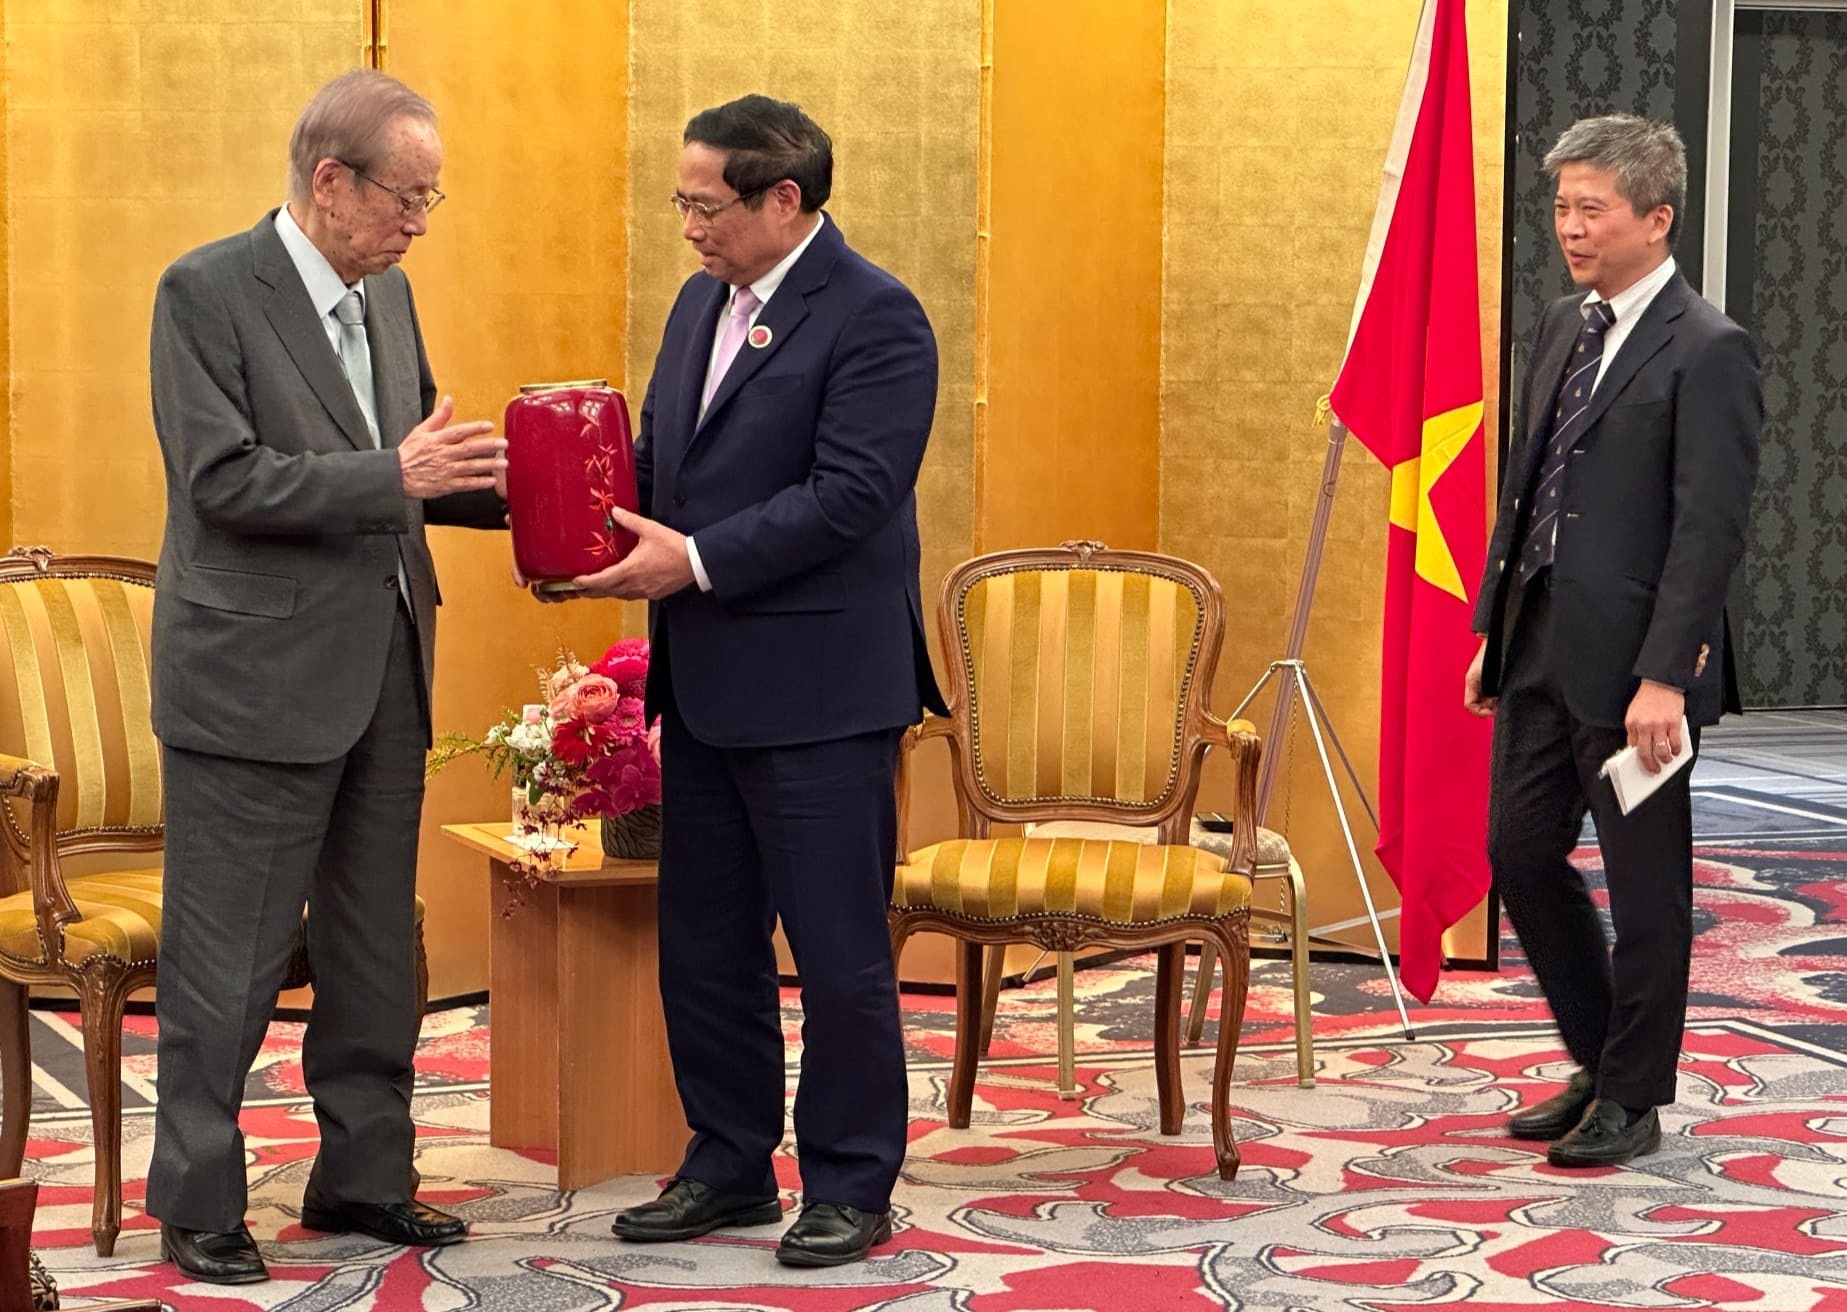 PM Pham Minh Chinh receives former Japanese PM Fukuda Yasuo